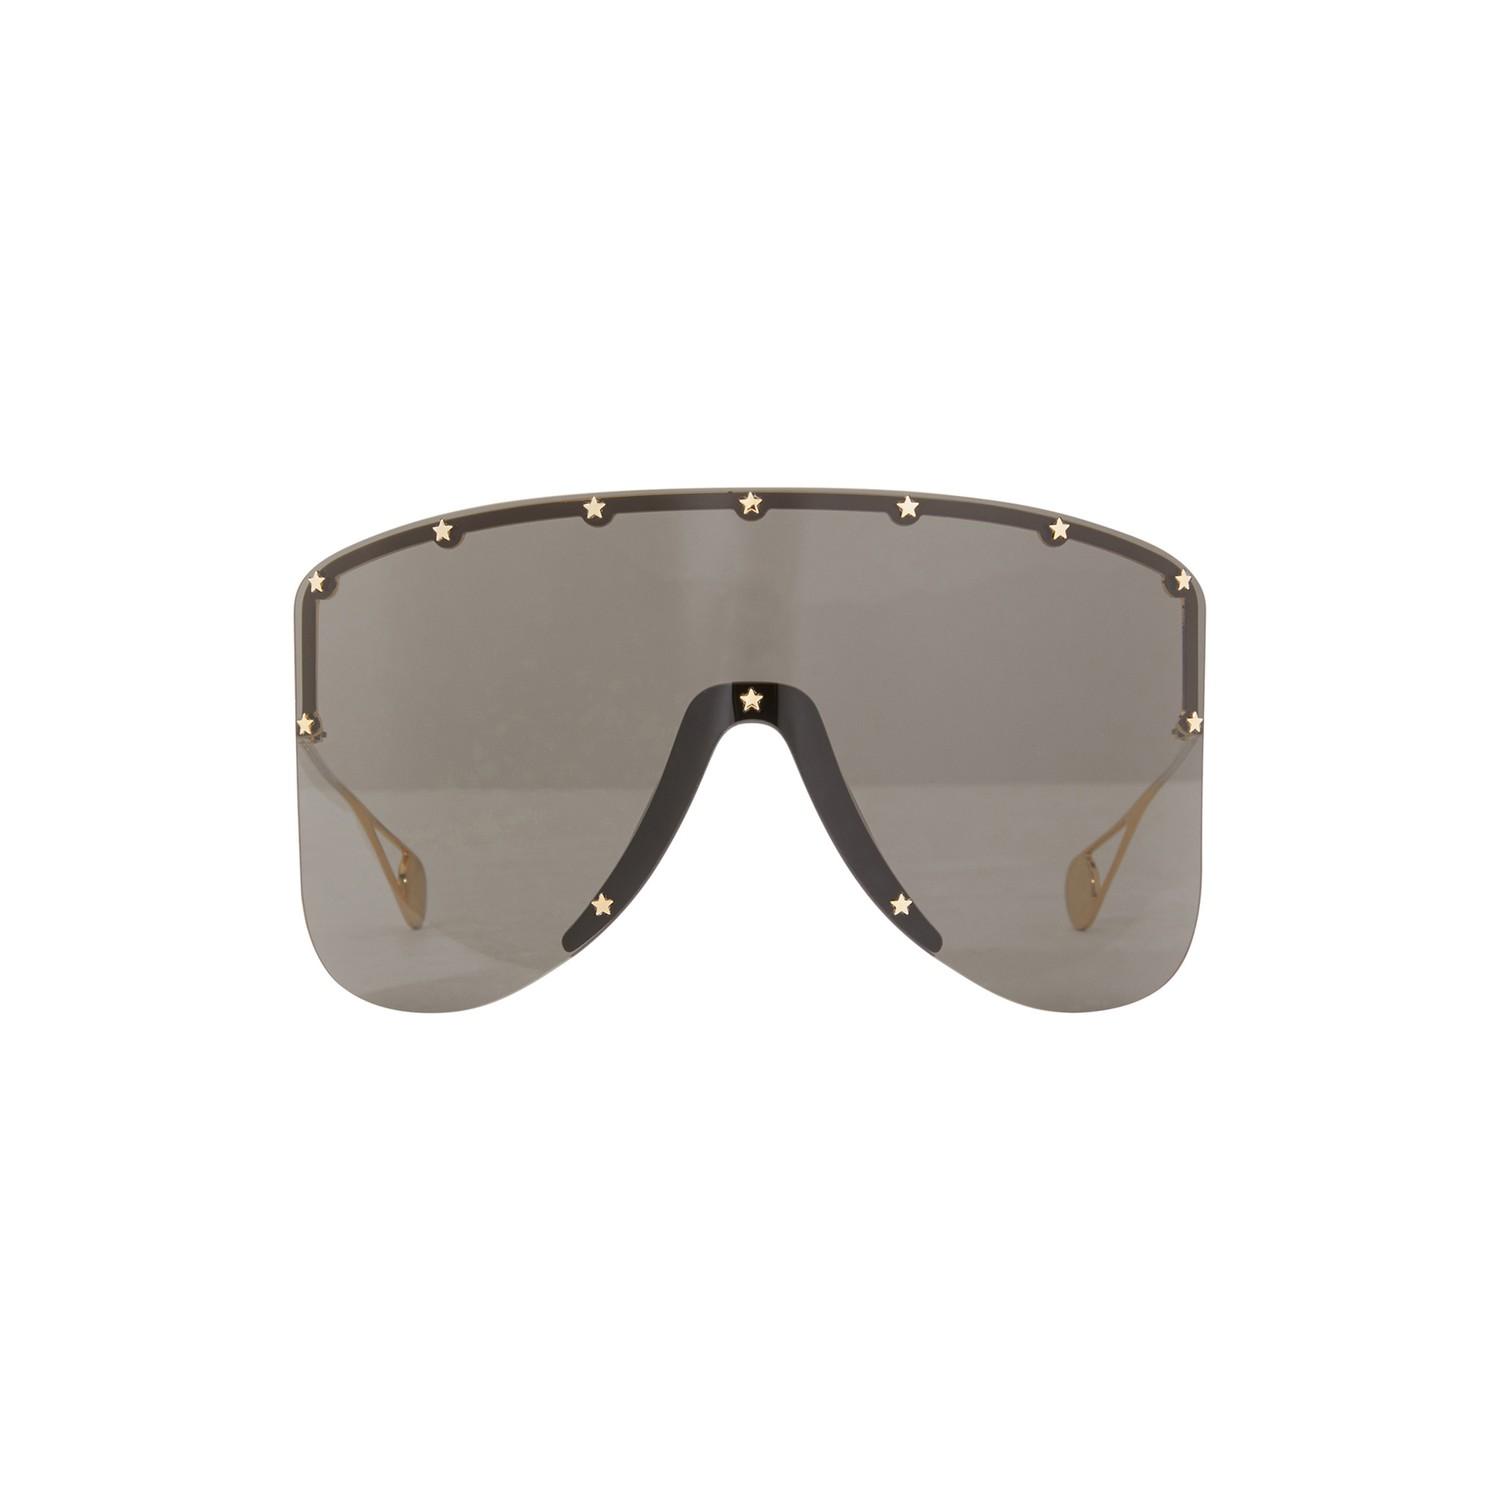 Gucci Rubber Mask Sunglasses in Grey (Gray) - Lyst